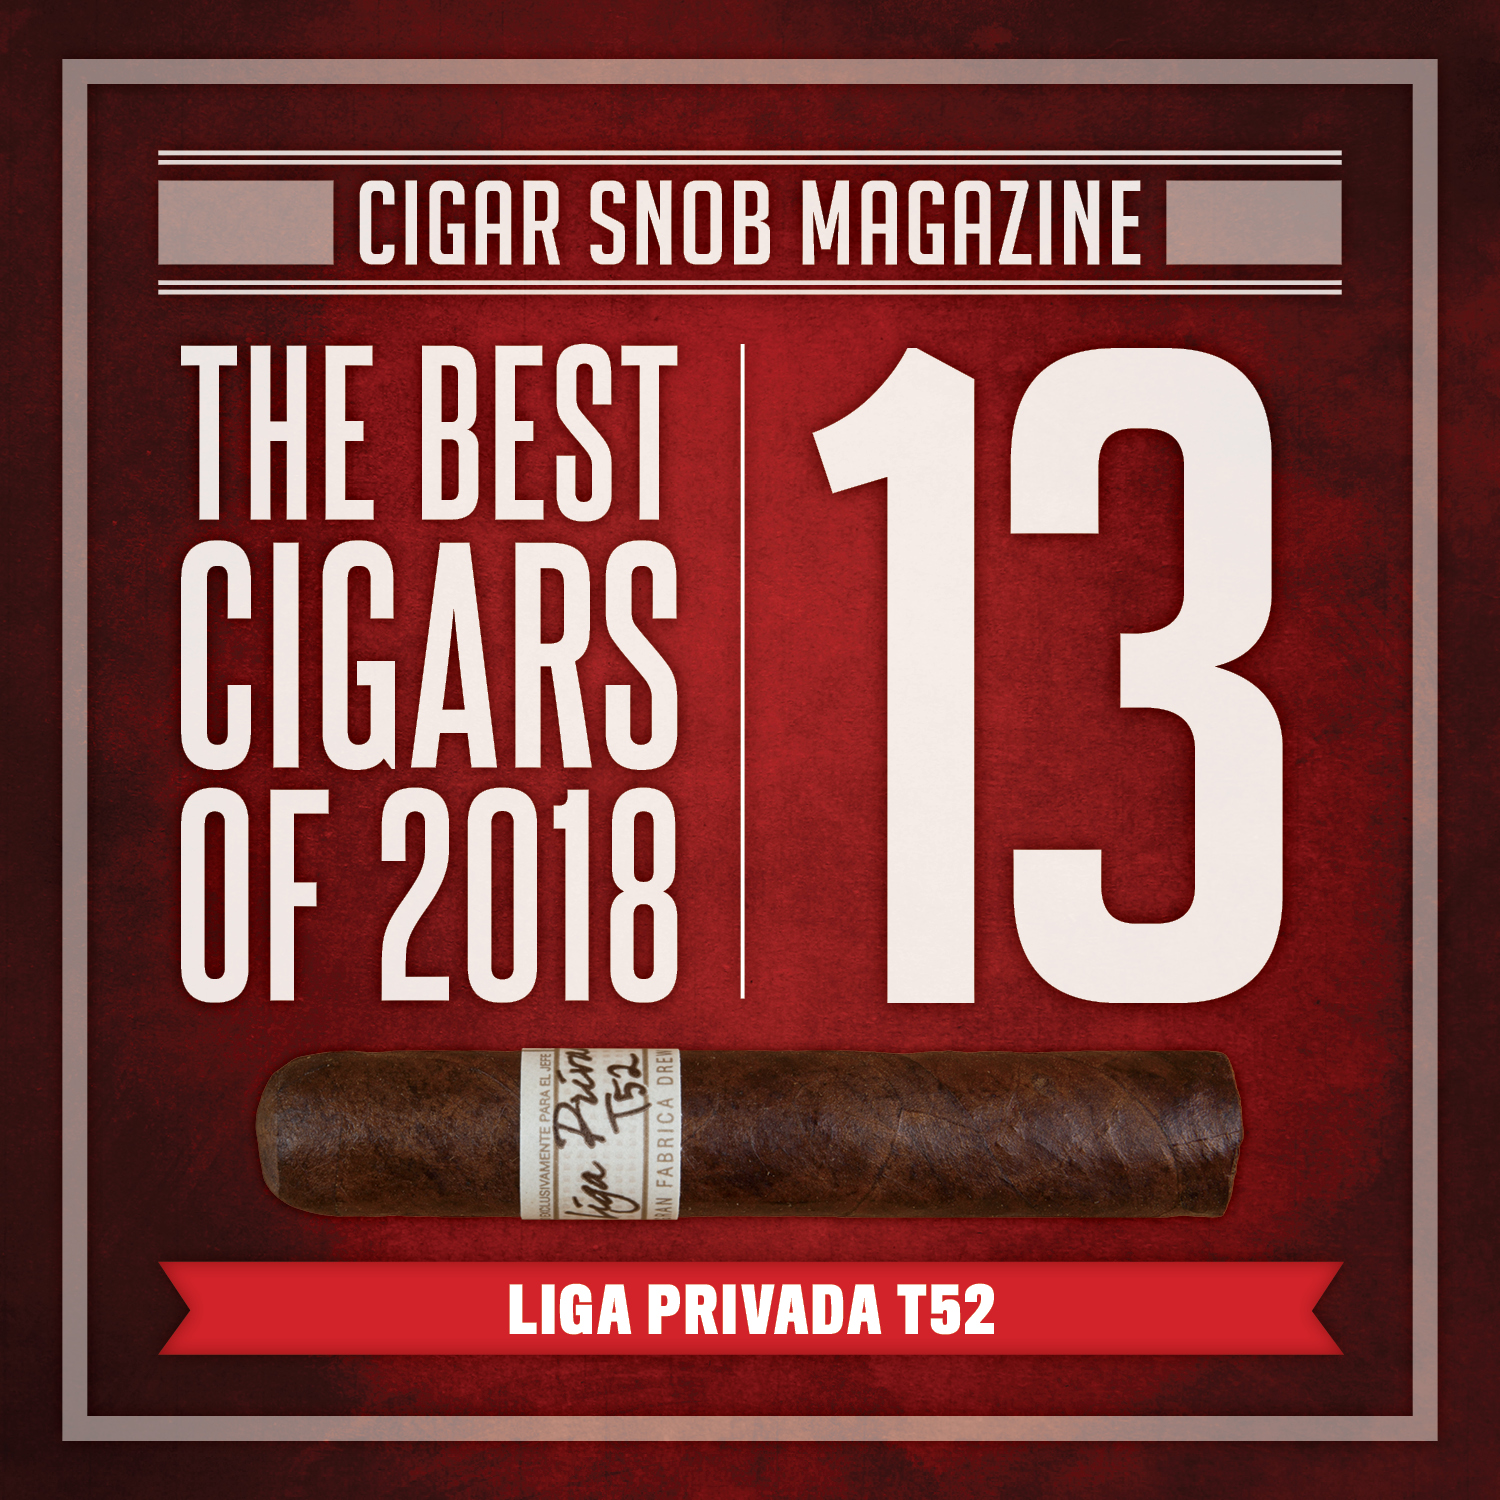 Drew Estate Ranks on CigarSnob Magazine’s Top 25 Cigars of 2018!